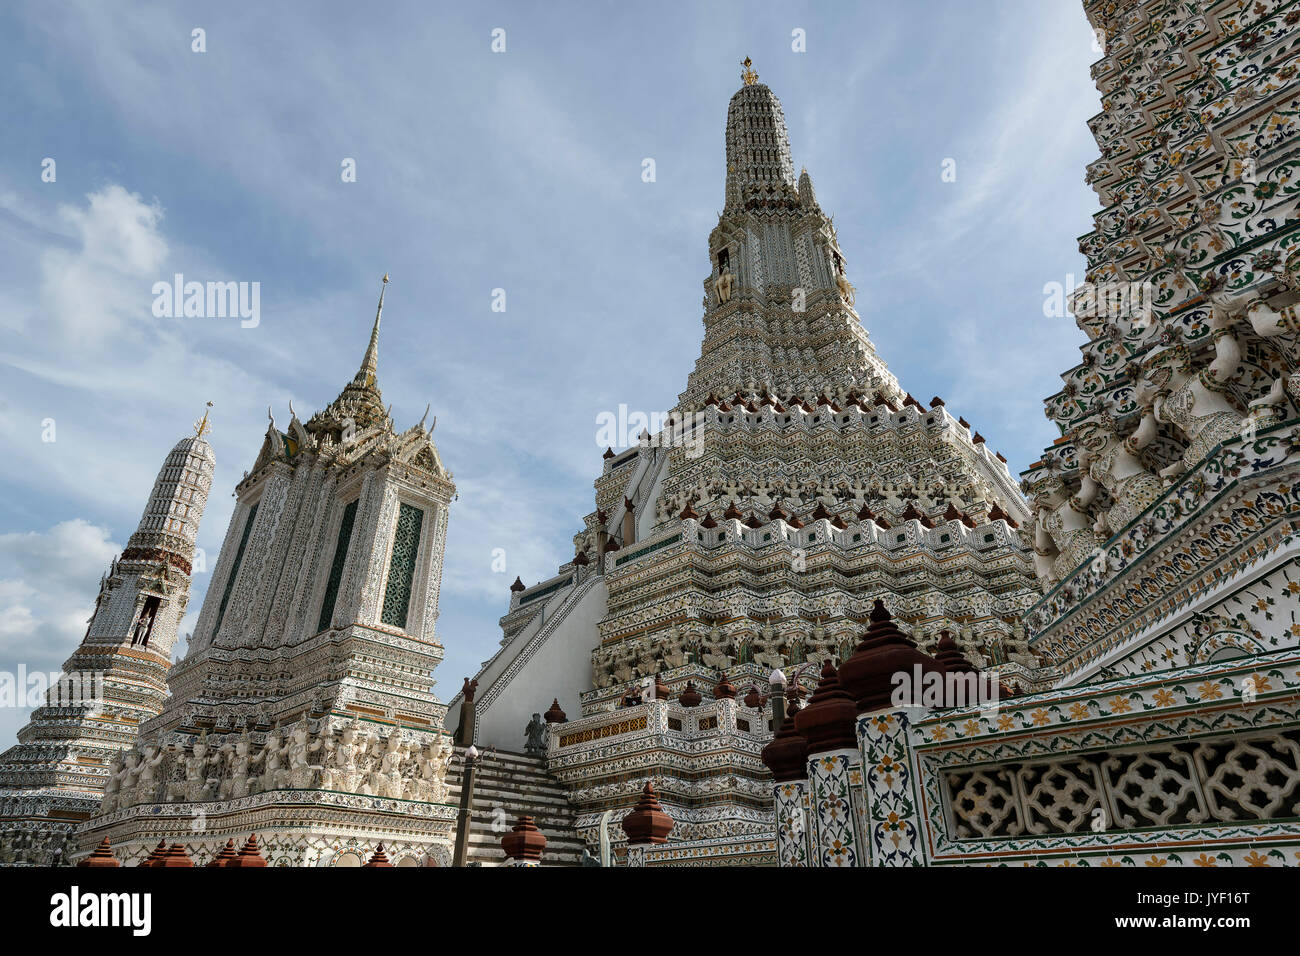 Wat Arun prestigious pagoda after a major renovation in 2016 - 2017, Bangkok, Thailand Stock Photo